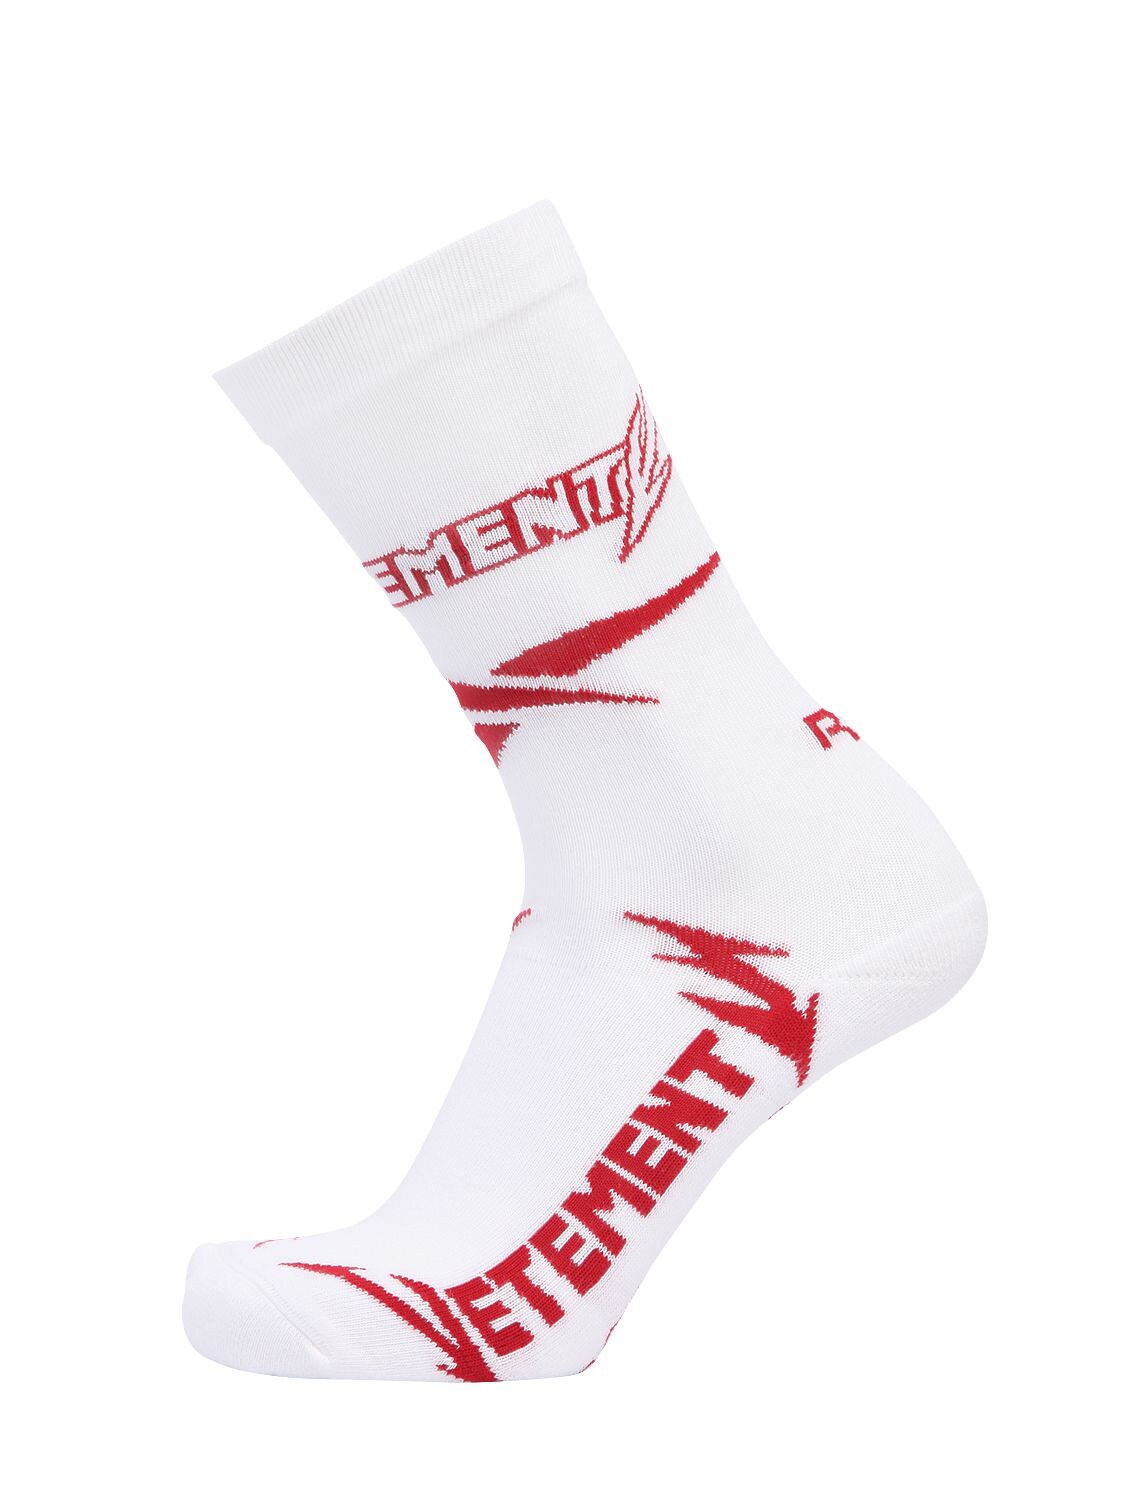 Vetements Reebok Metal Cotton Blend Socks In White/red